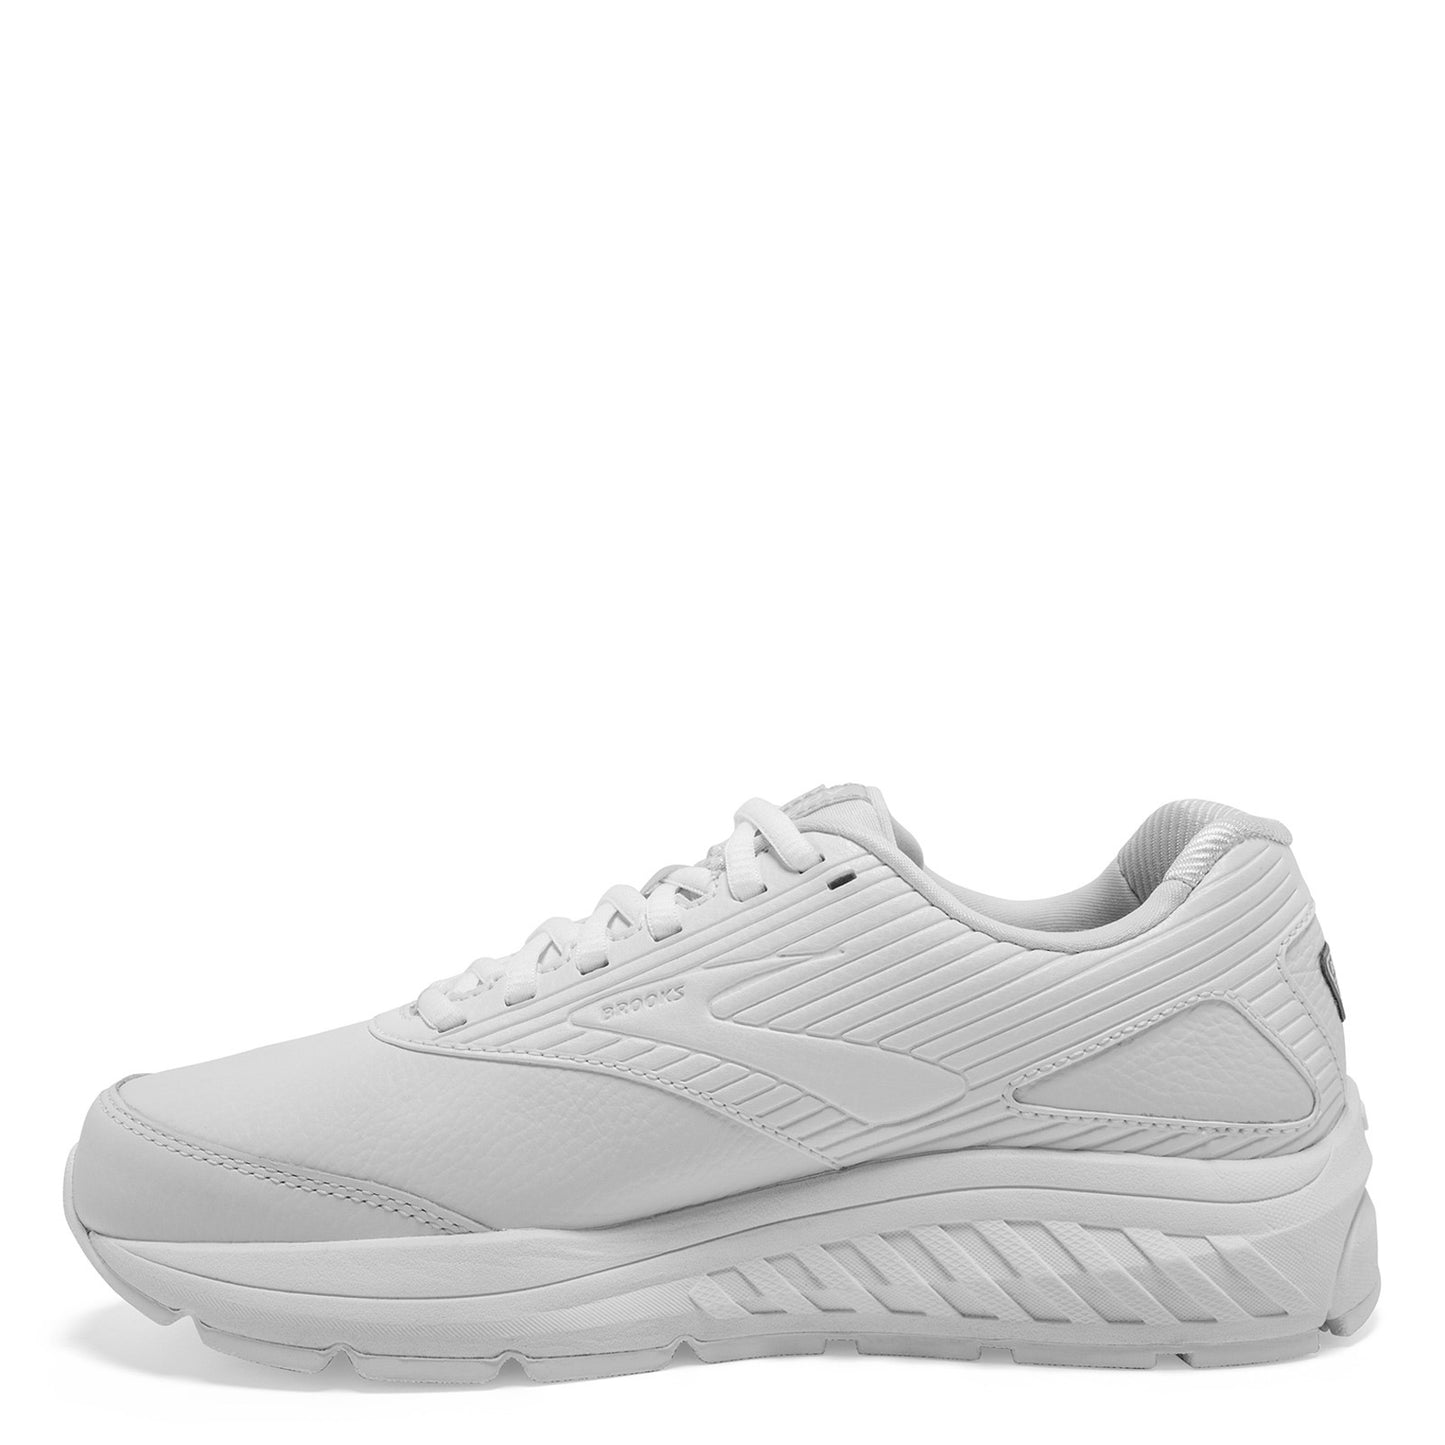 Peltz Shoes  Women's Brooks Addiction Walker 2 Walking Shoe - Narrow Width White/White 120307 2A 142